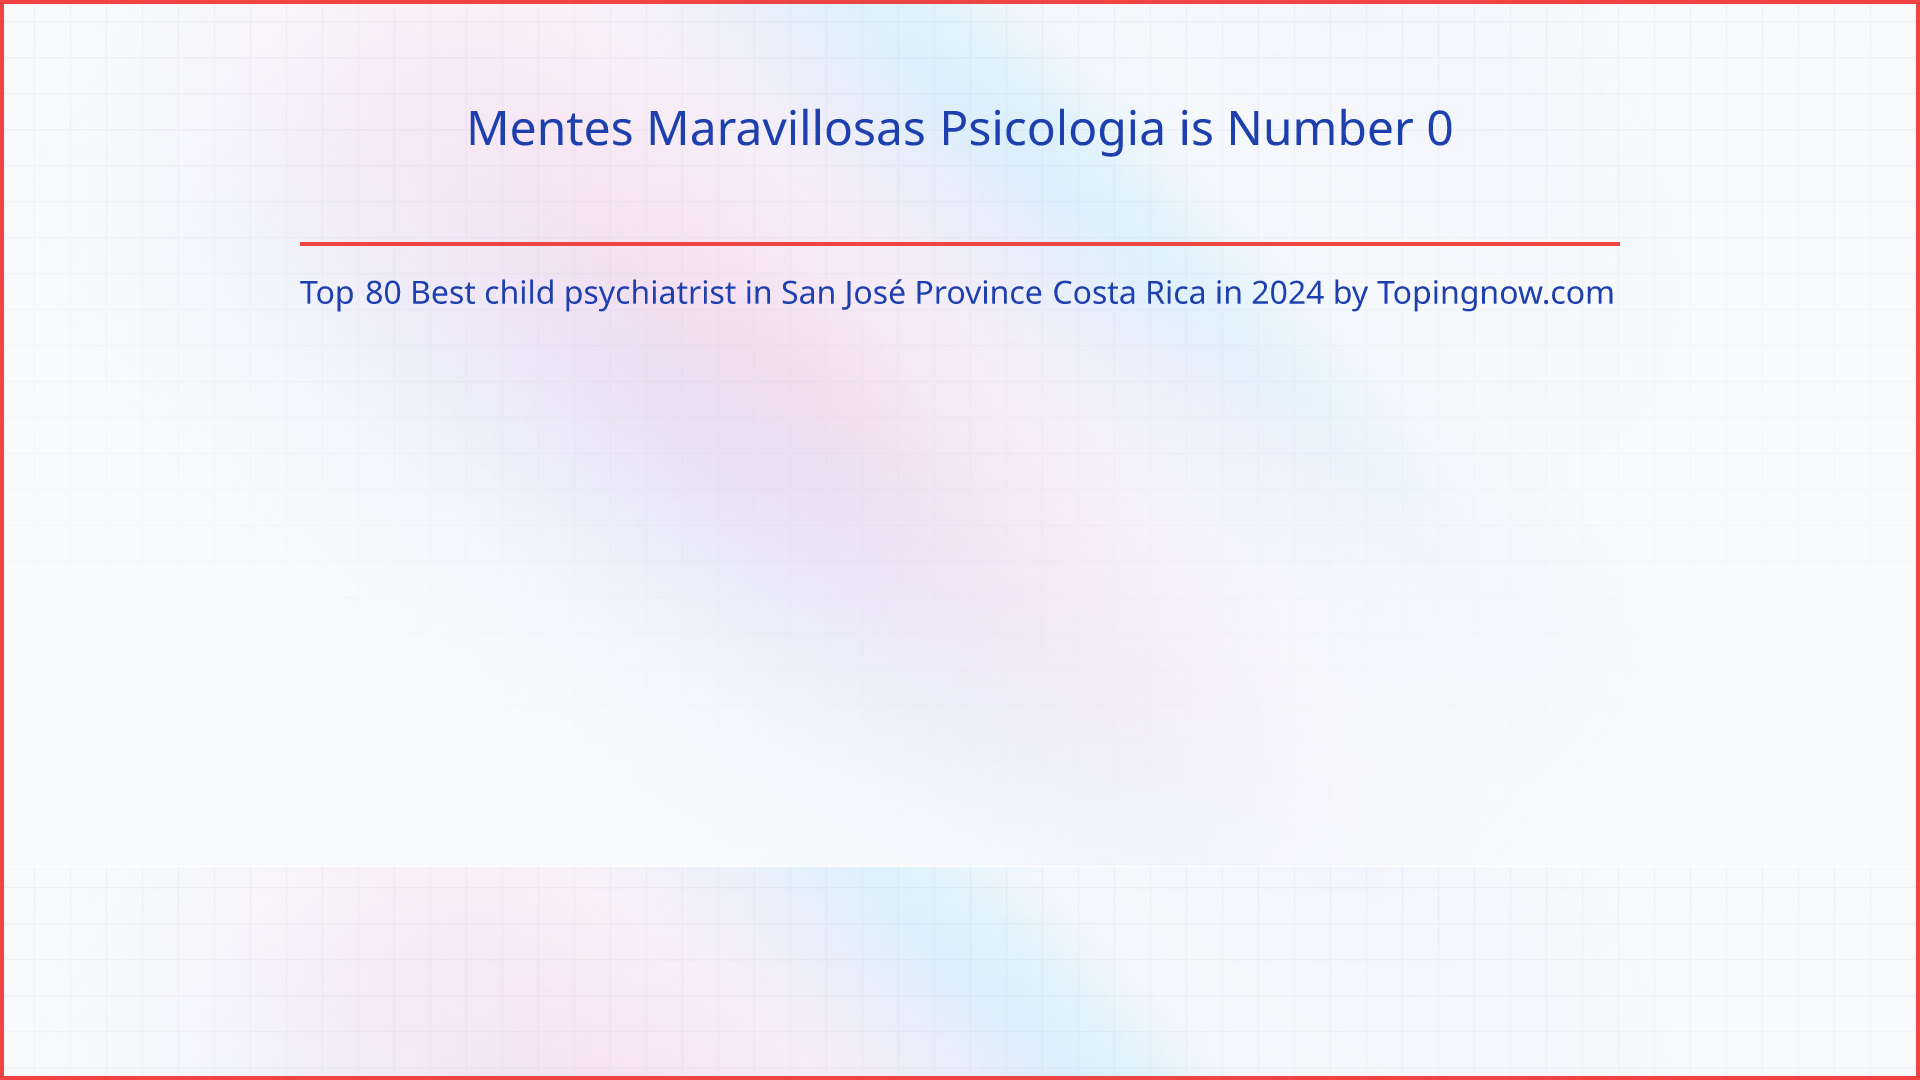 Mentes Maravillosas Psicologia: Top 80 Best child psychiatrist in San José Province Costa Rica in 2024